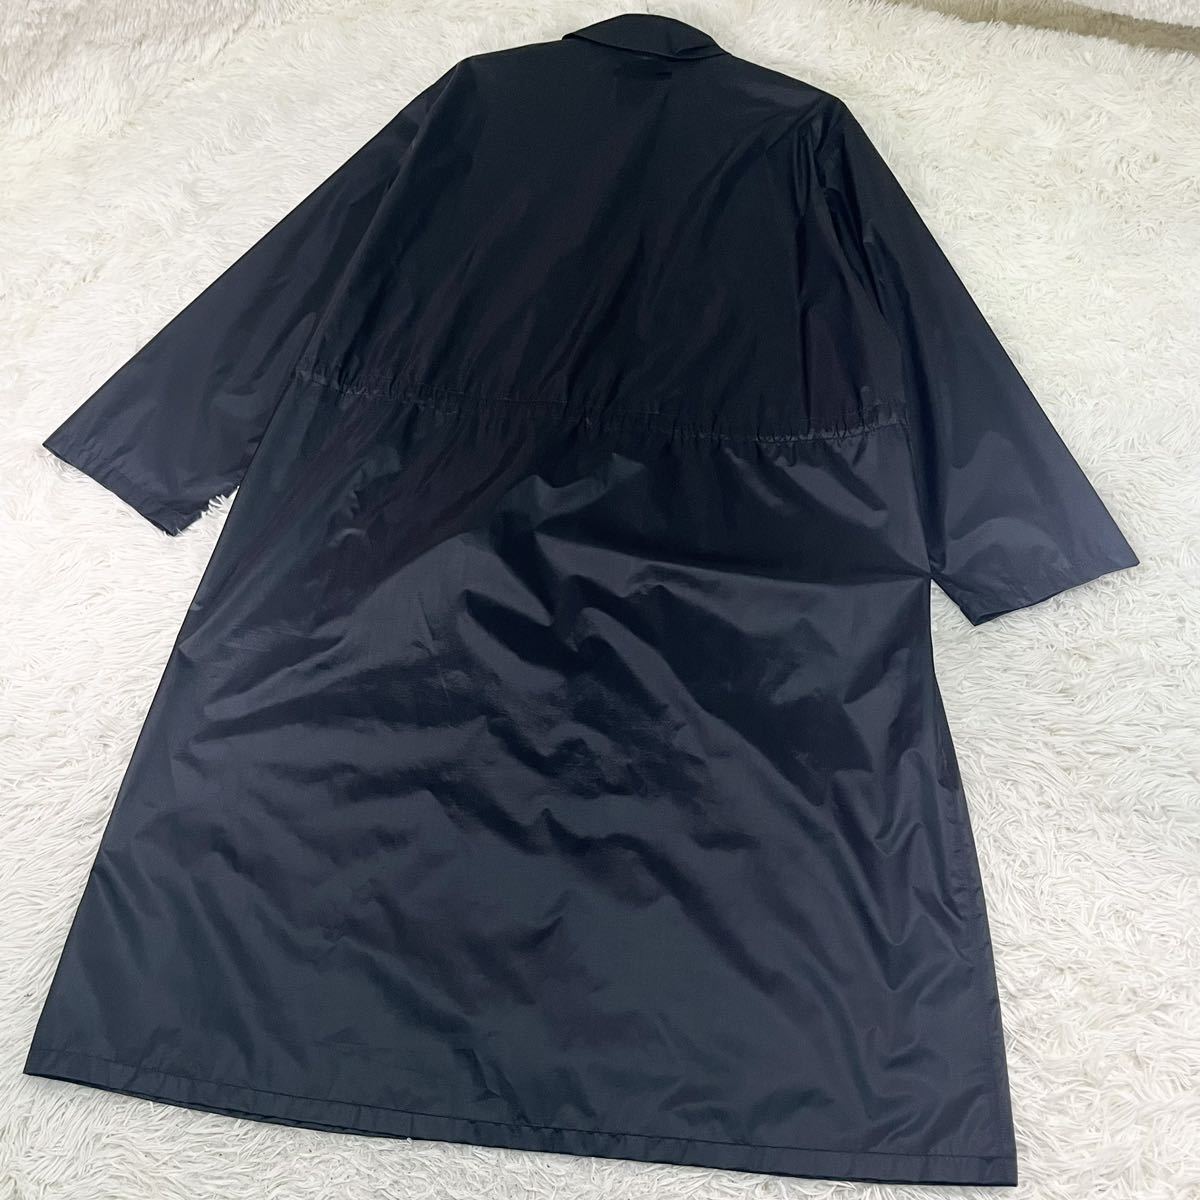  unused class L size NEUTRAL WORKS neutral Works bench coat Coach coat jacket nylon Coach Coat long height black black 